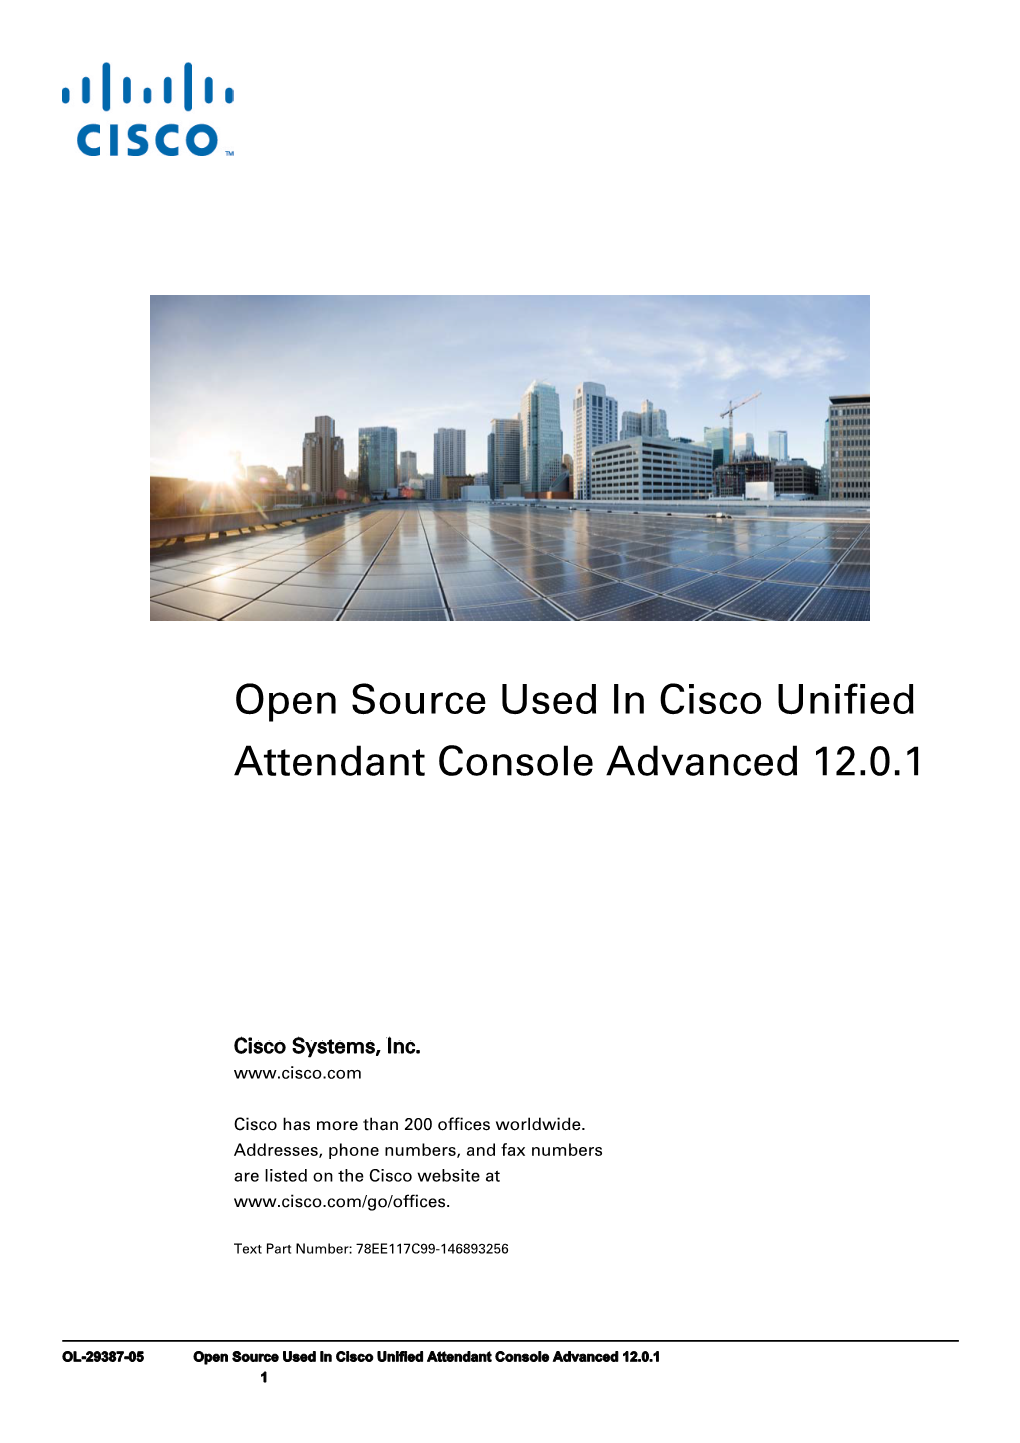 Cisco Unified Attendant Console Advanced 12.0.1 Open Source Documentation